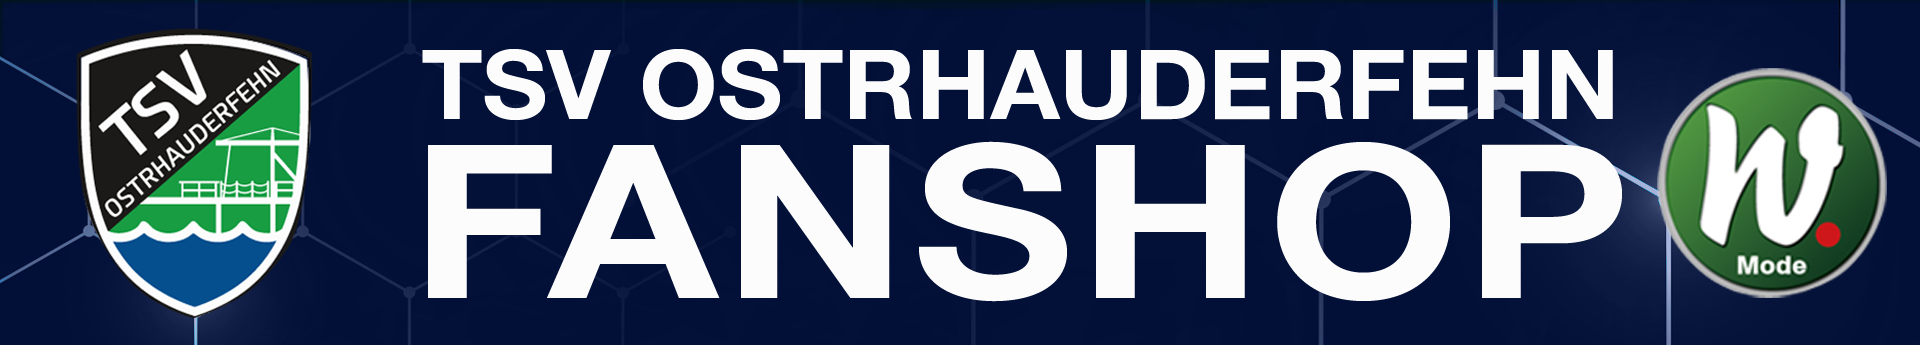 TSV Ostrhauderfehn Title Image